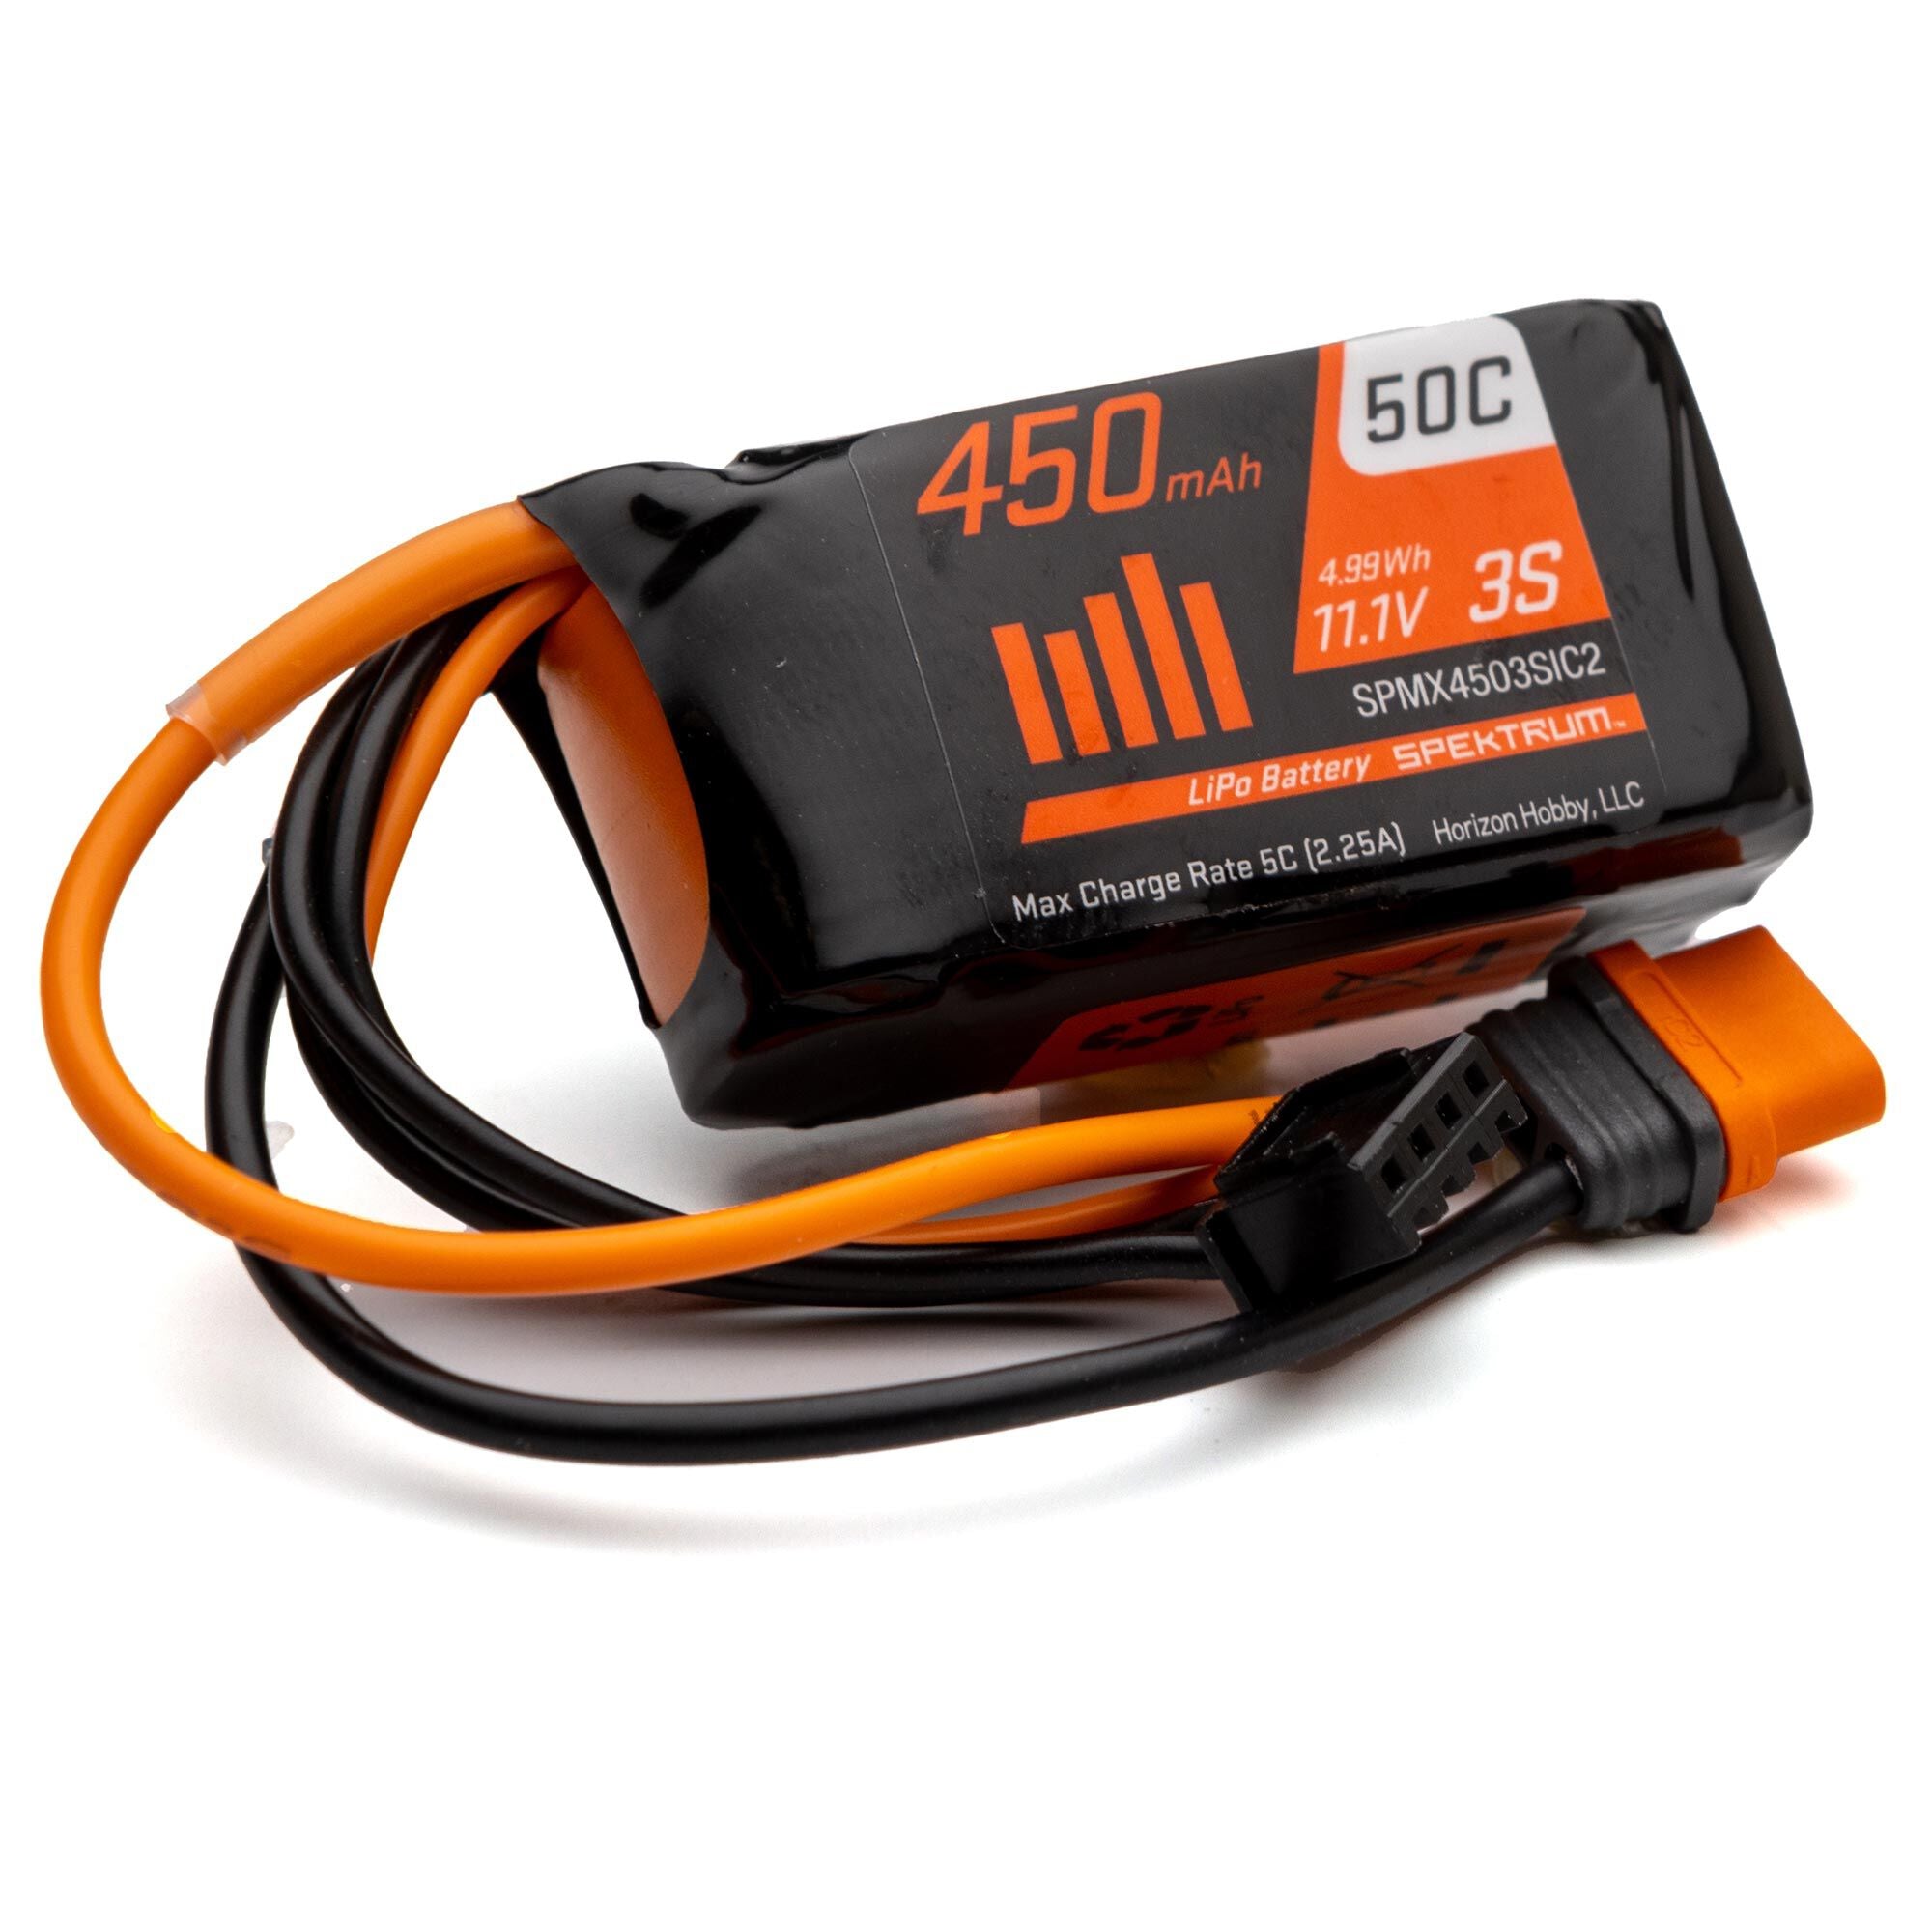 Spectrum 11.1V 450mAh 3S 50C LiPo Battery: IC2